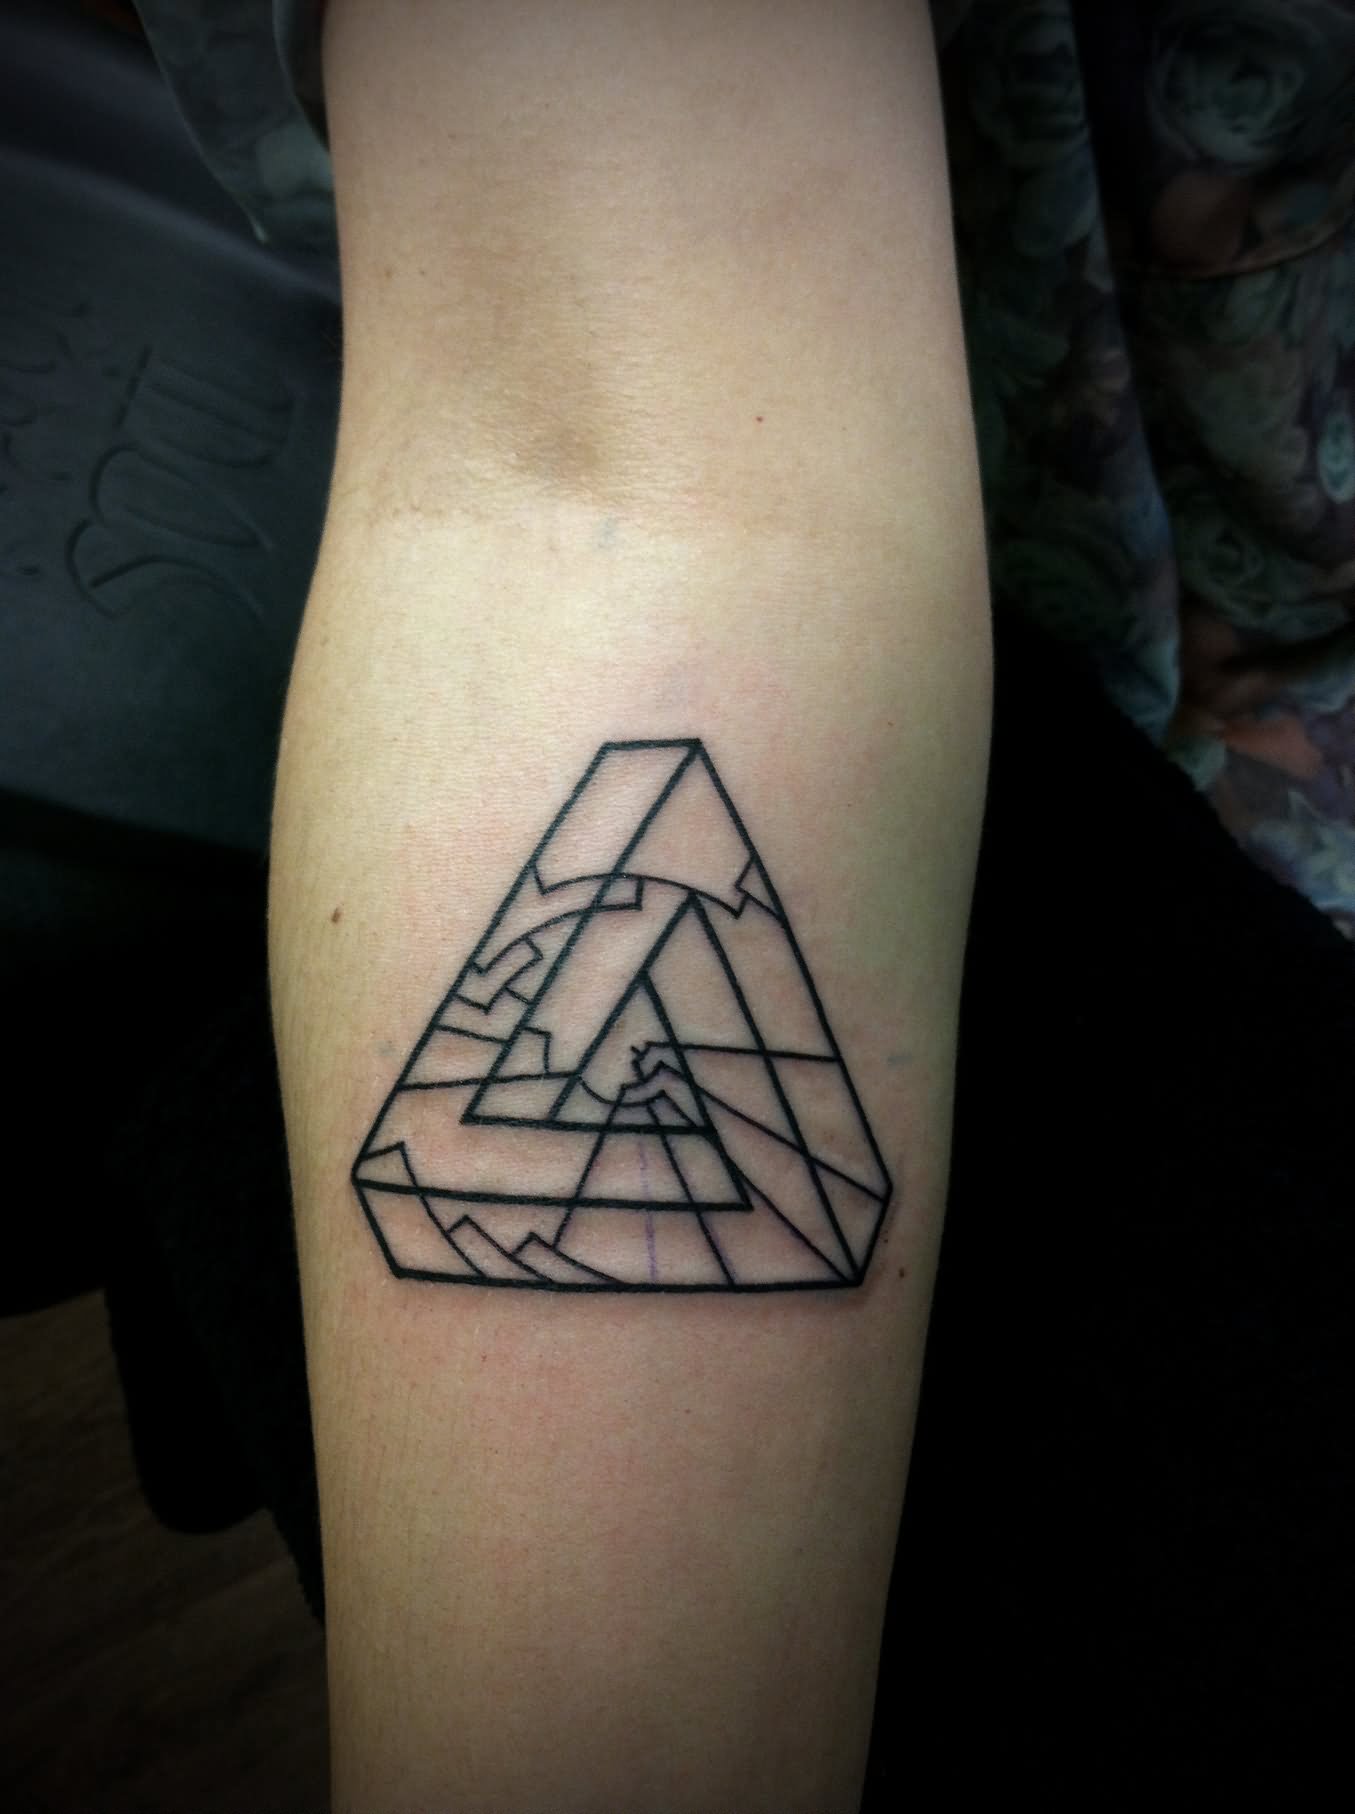 Cool Penrose Triangle Tattoo On Right Forearm